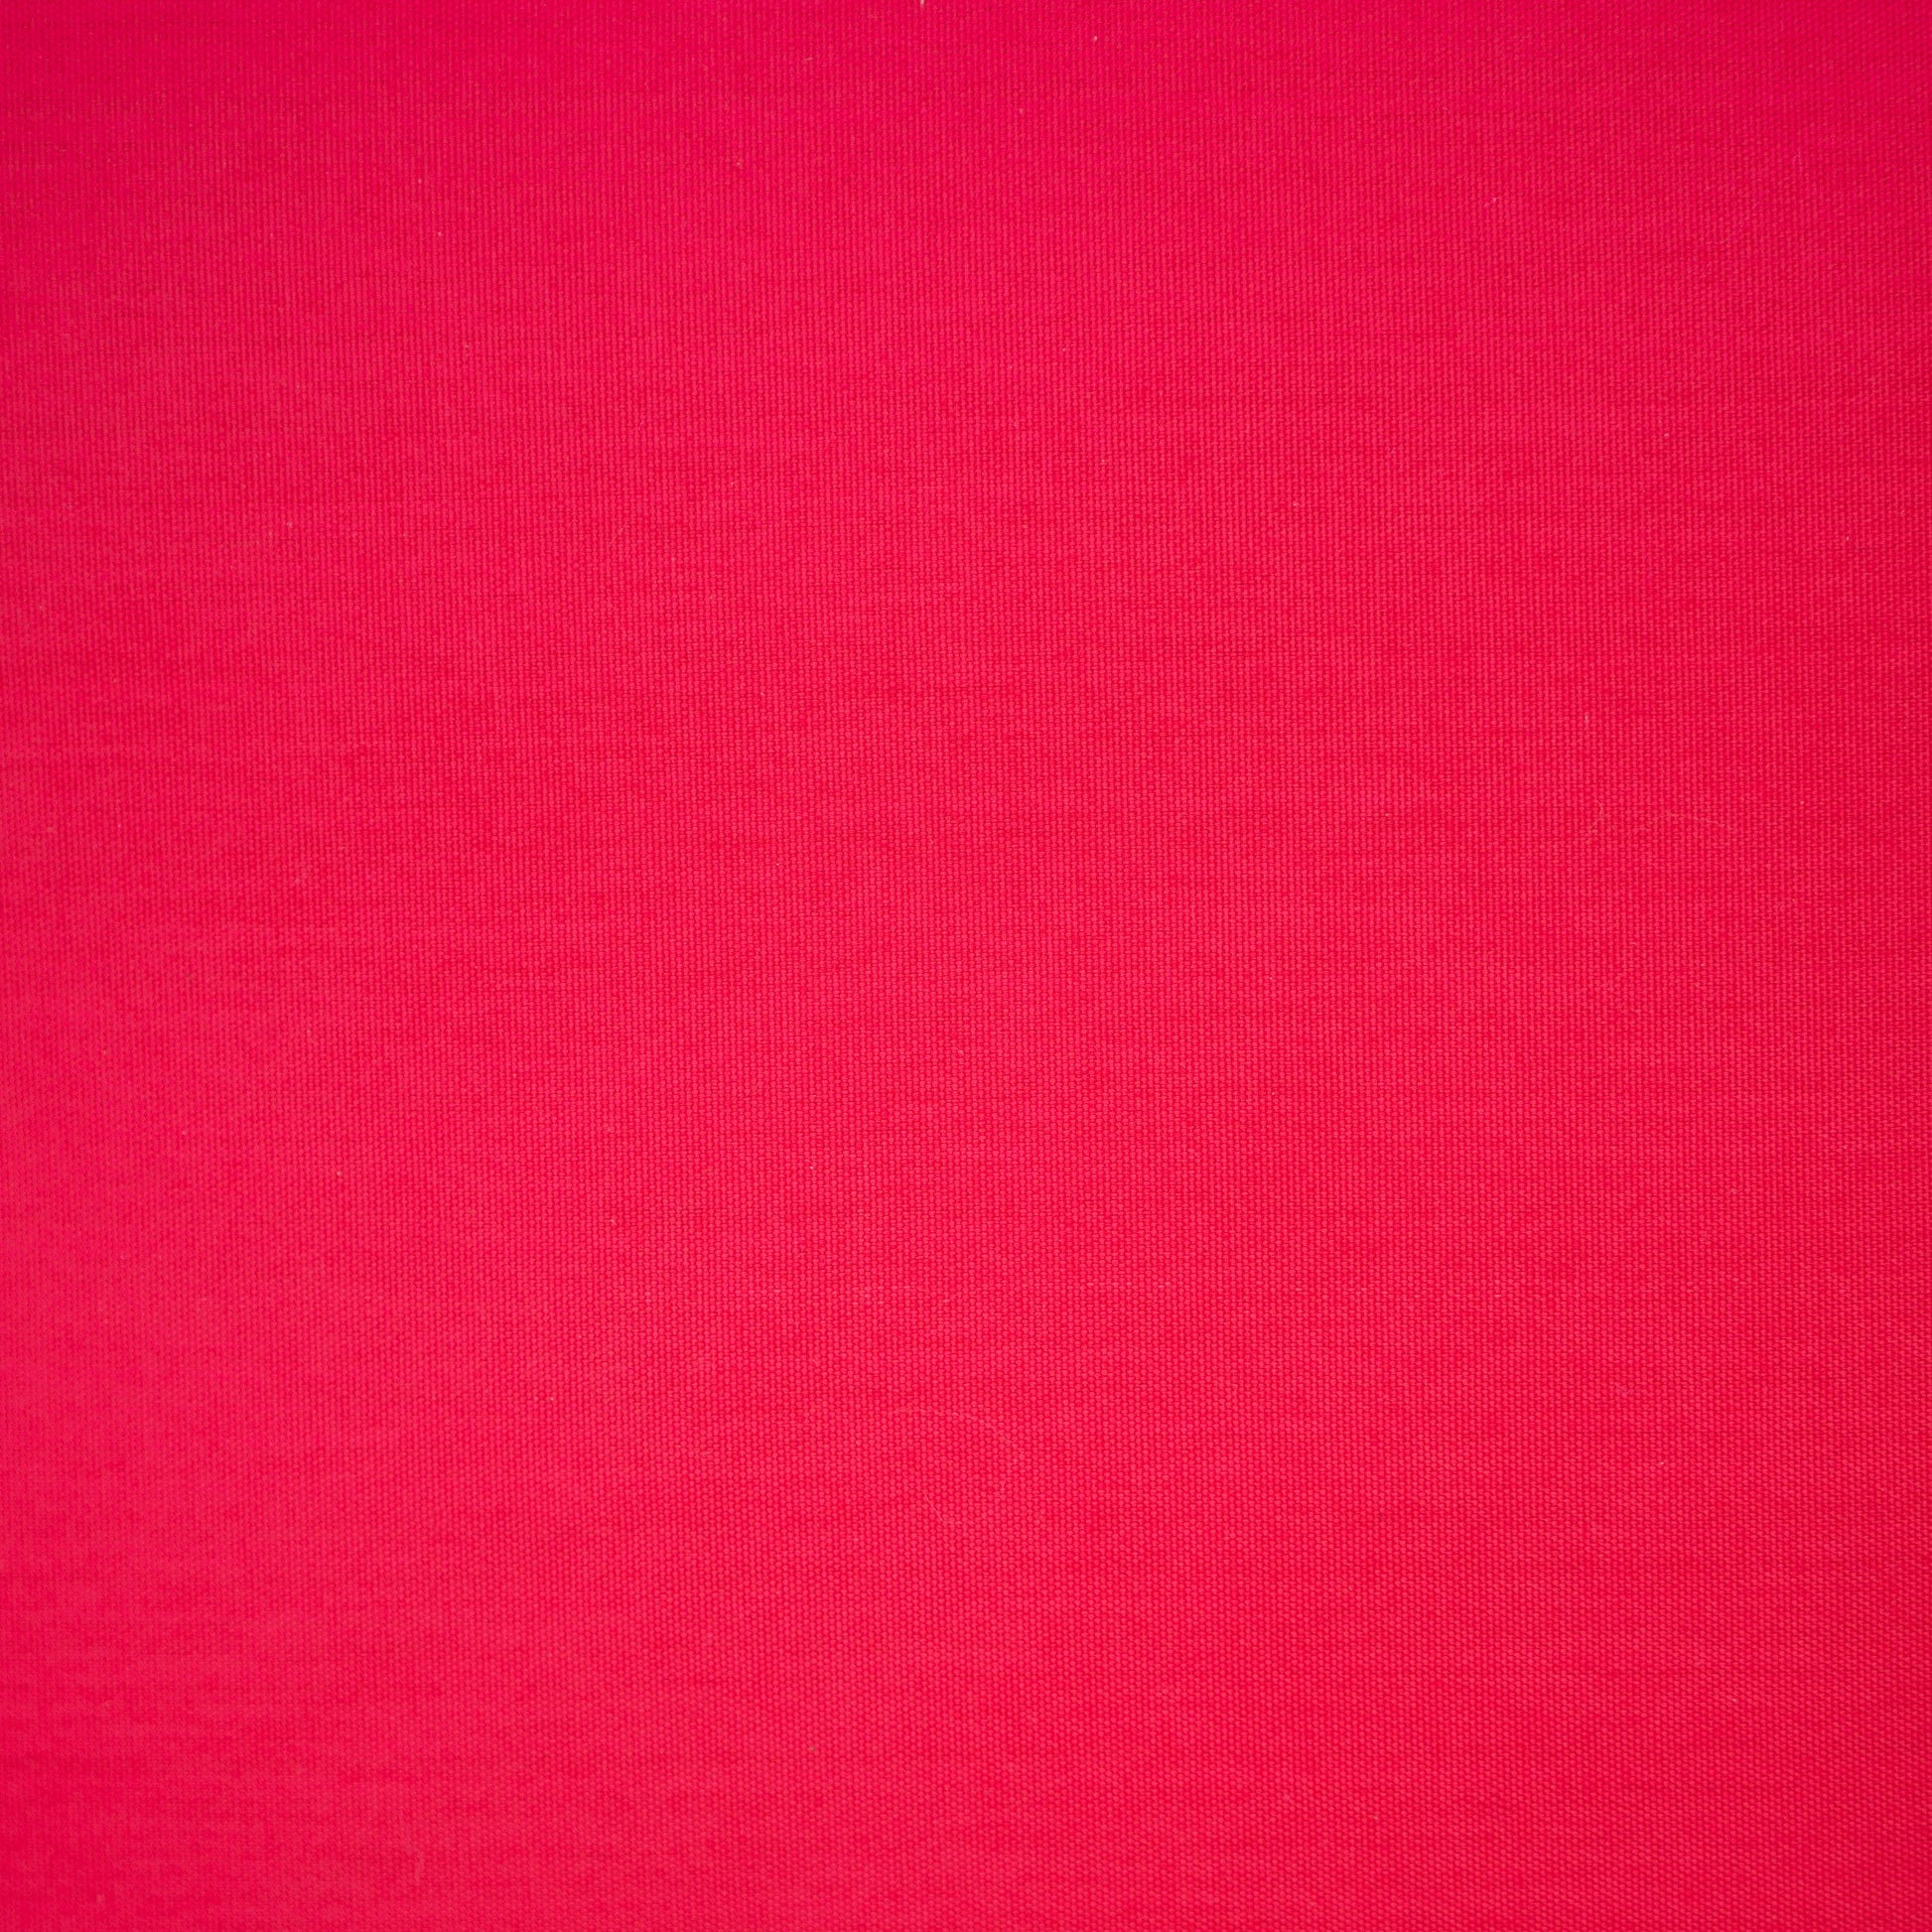 CORONADO SQUARE PILLOW SET OF 2 red-fabric